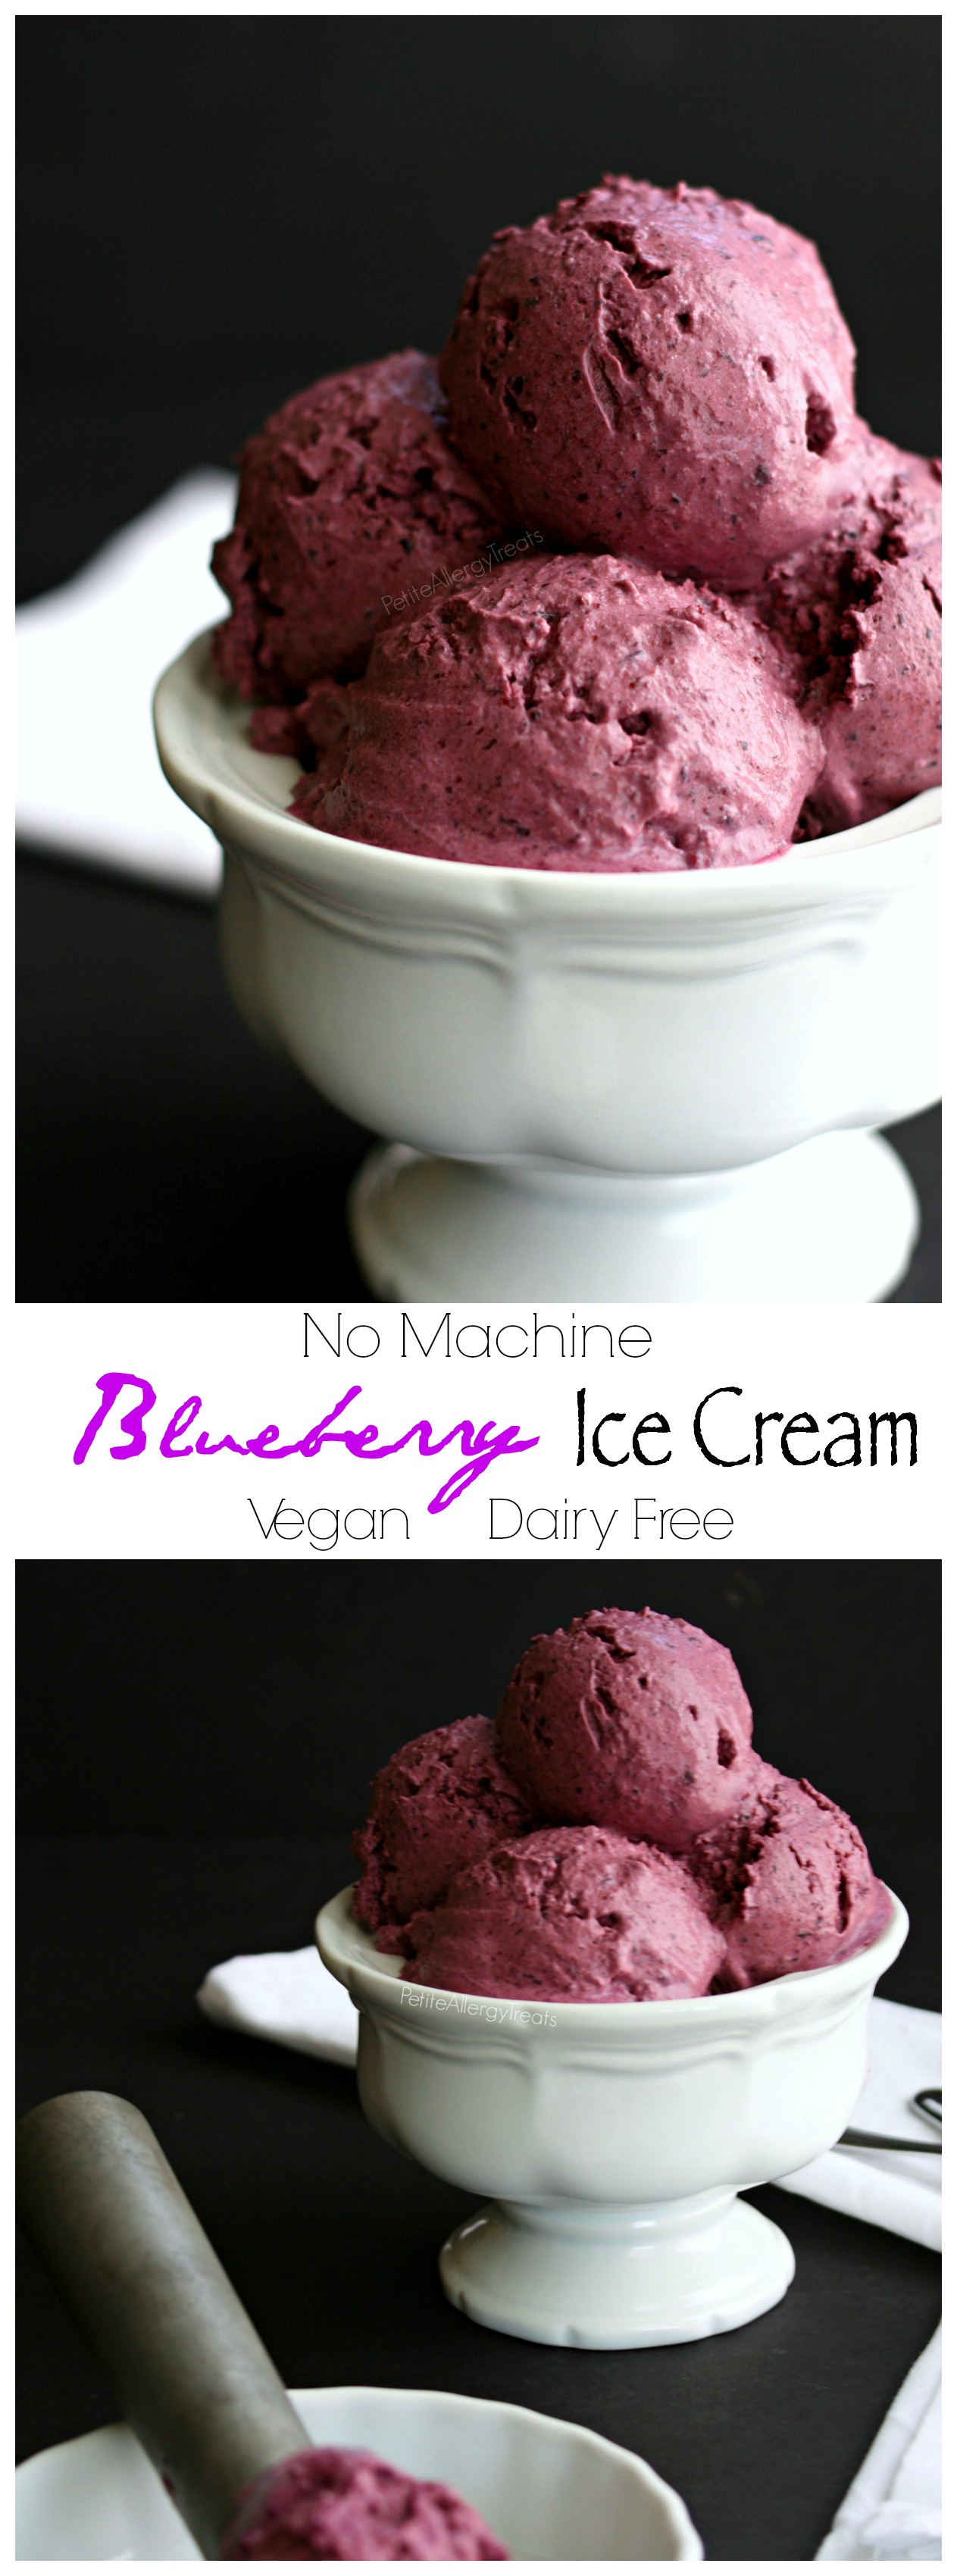 Blueberry Ice Cream- No Machine (dairy free vegan)- 3 ingredients make this creamy no machine required, treat bursting with real blueberries!